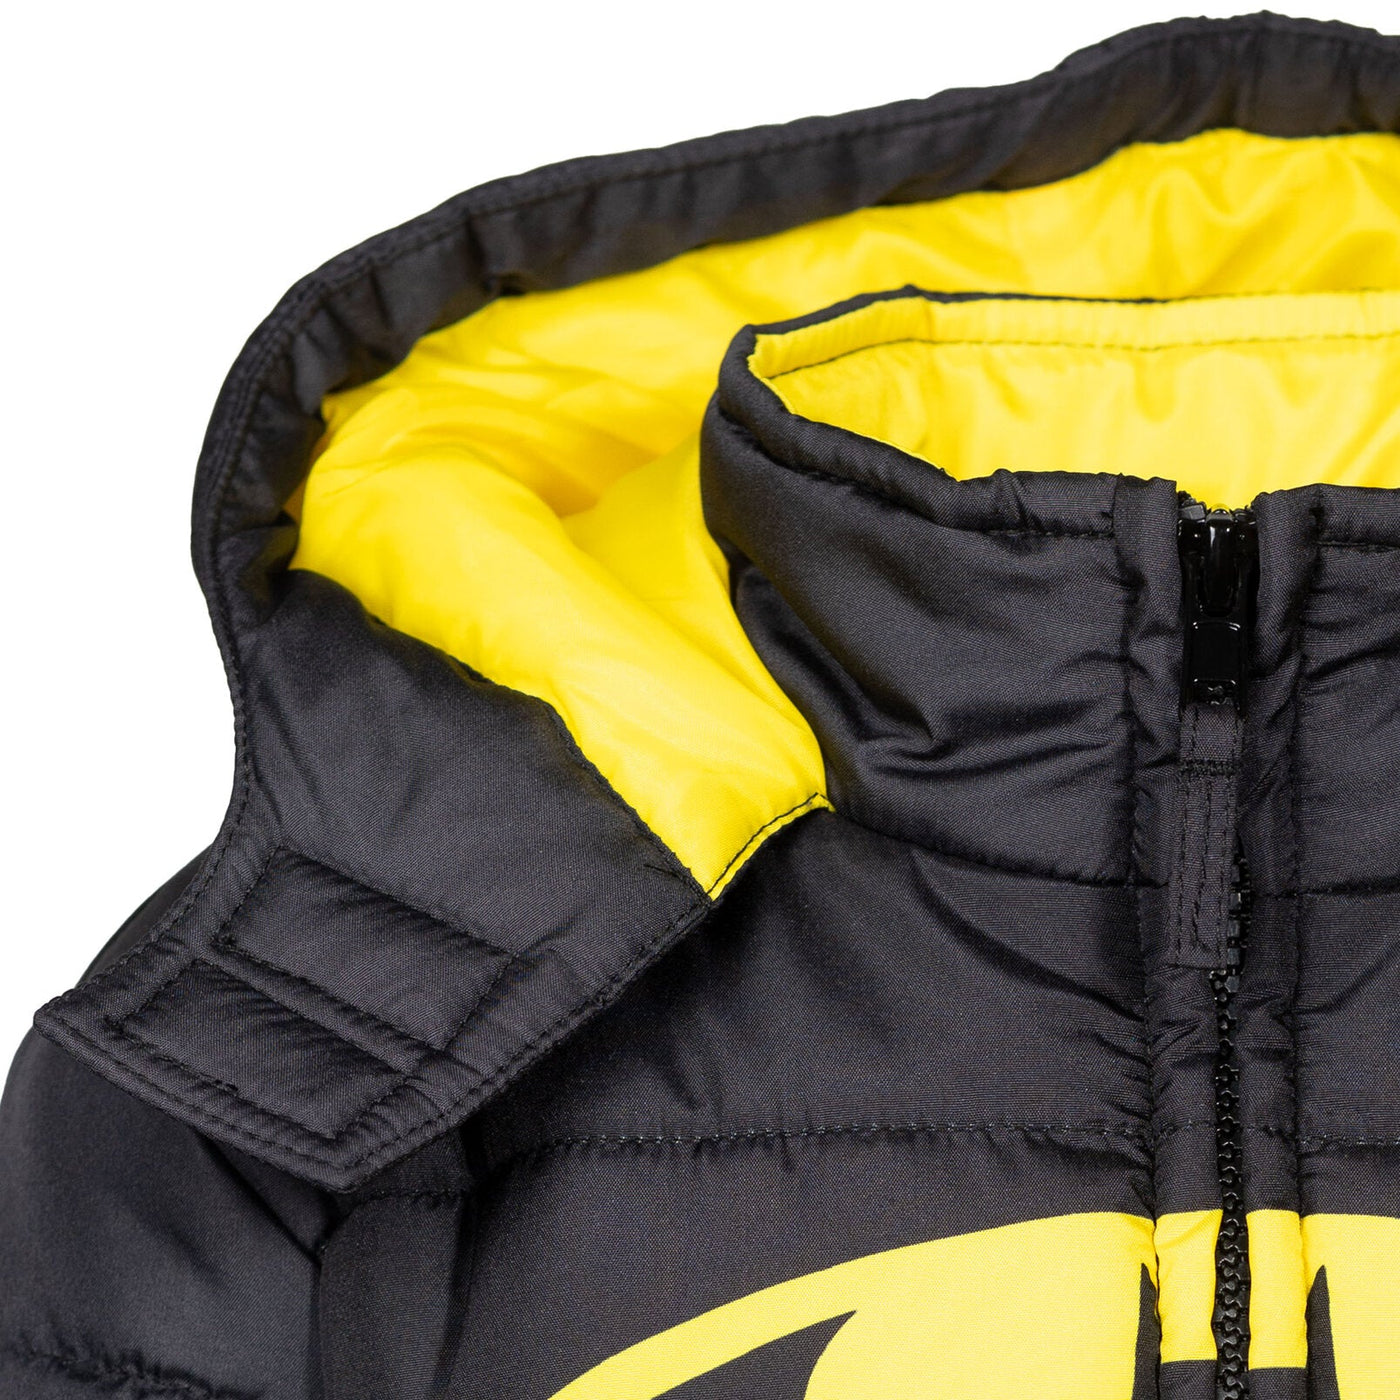 DC Comics Justice League Batman Zip Up Winter Coat Puffer Jacket - imagikids